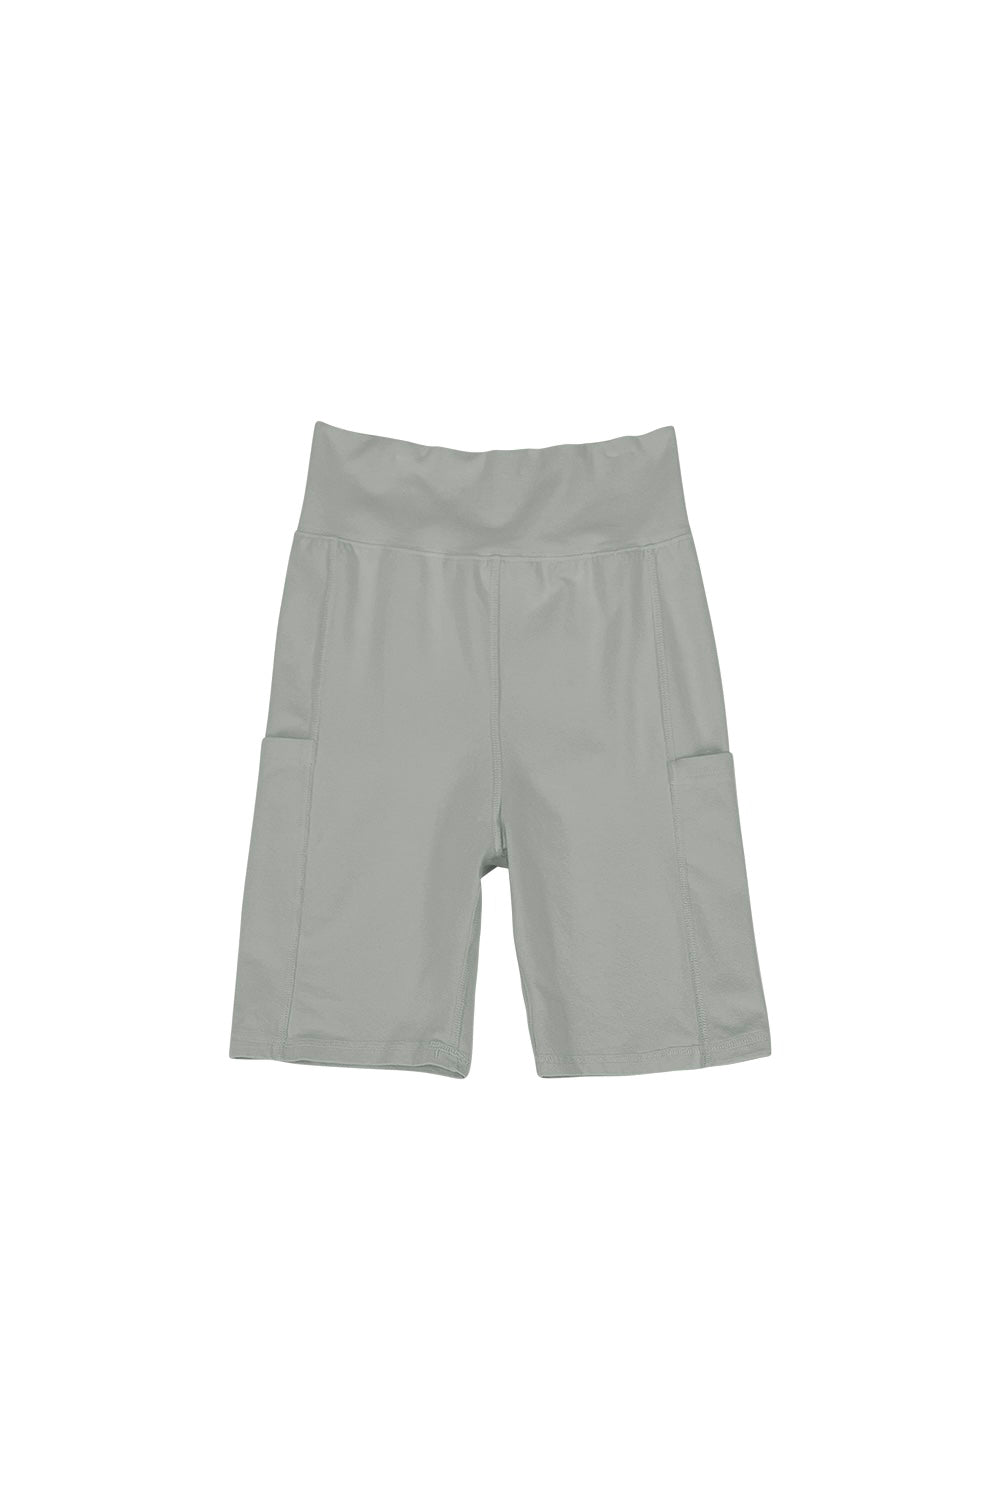 Bike Short with Pockets | Jungmaven Hemp Clothing & Accessories / Color: Seafoam Green